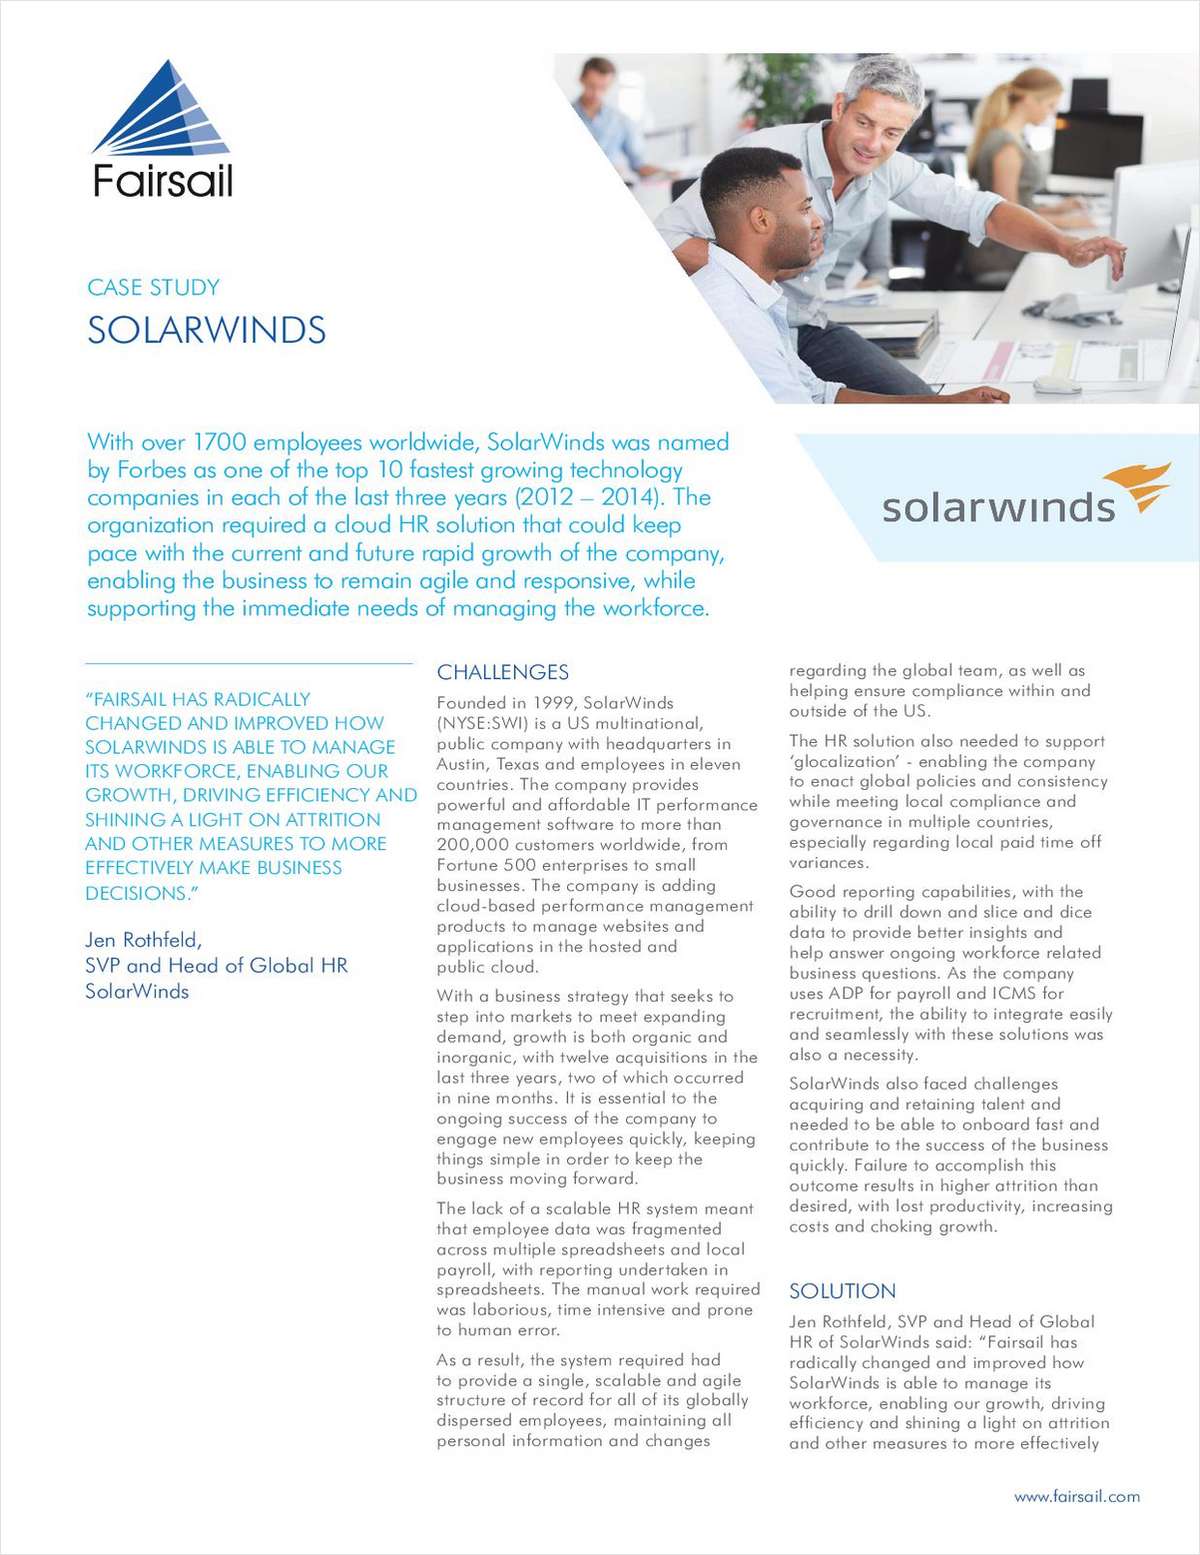 Fairsail Case Study: SolarWinds